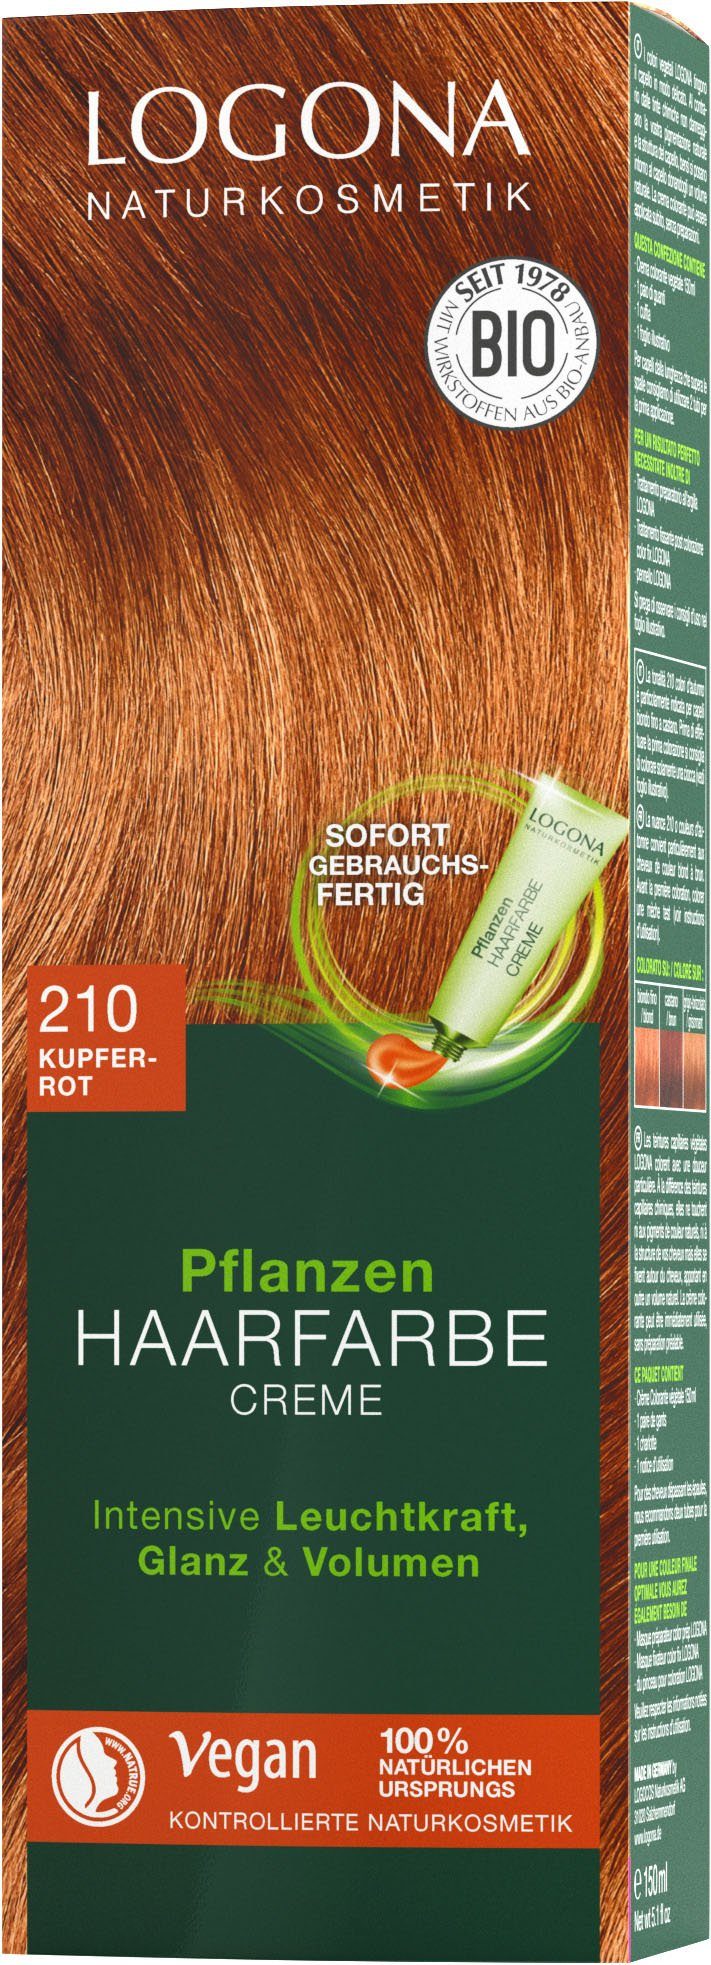 LOGONA Haarfarbe Logona kupferrot Pflanzen-Haarfarbe 210 Creme